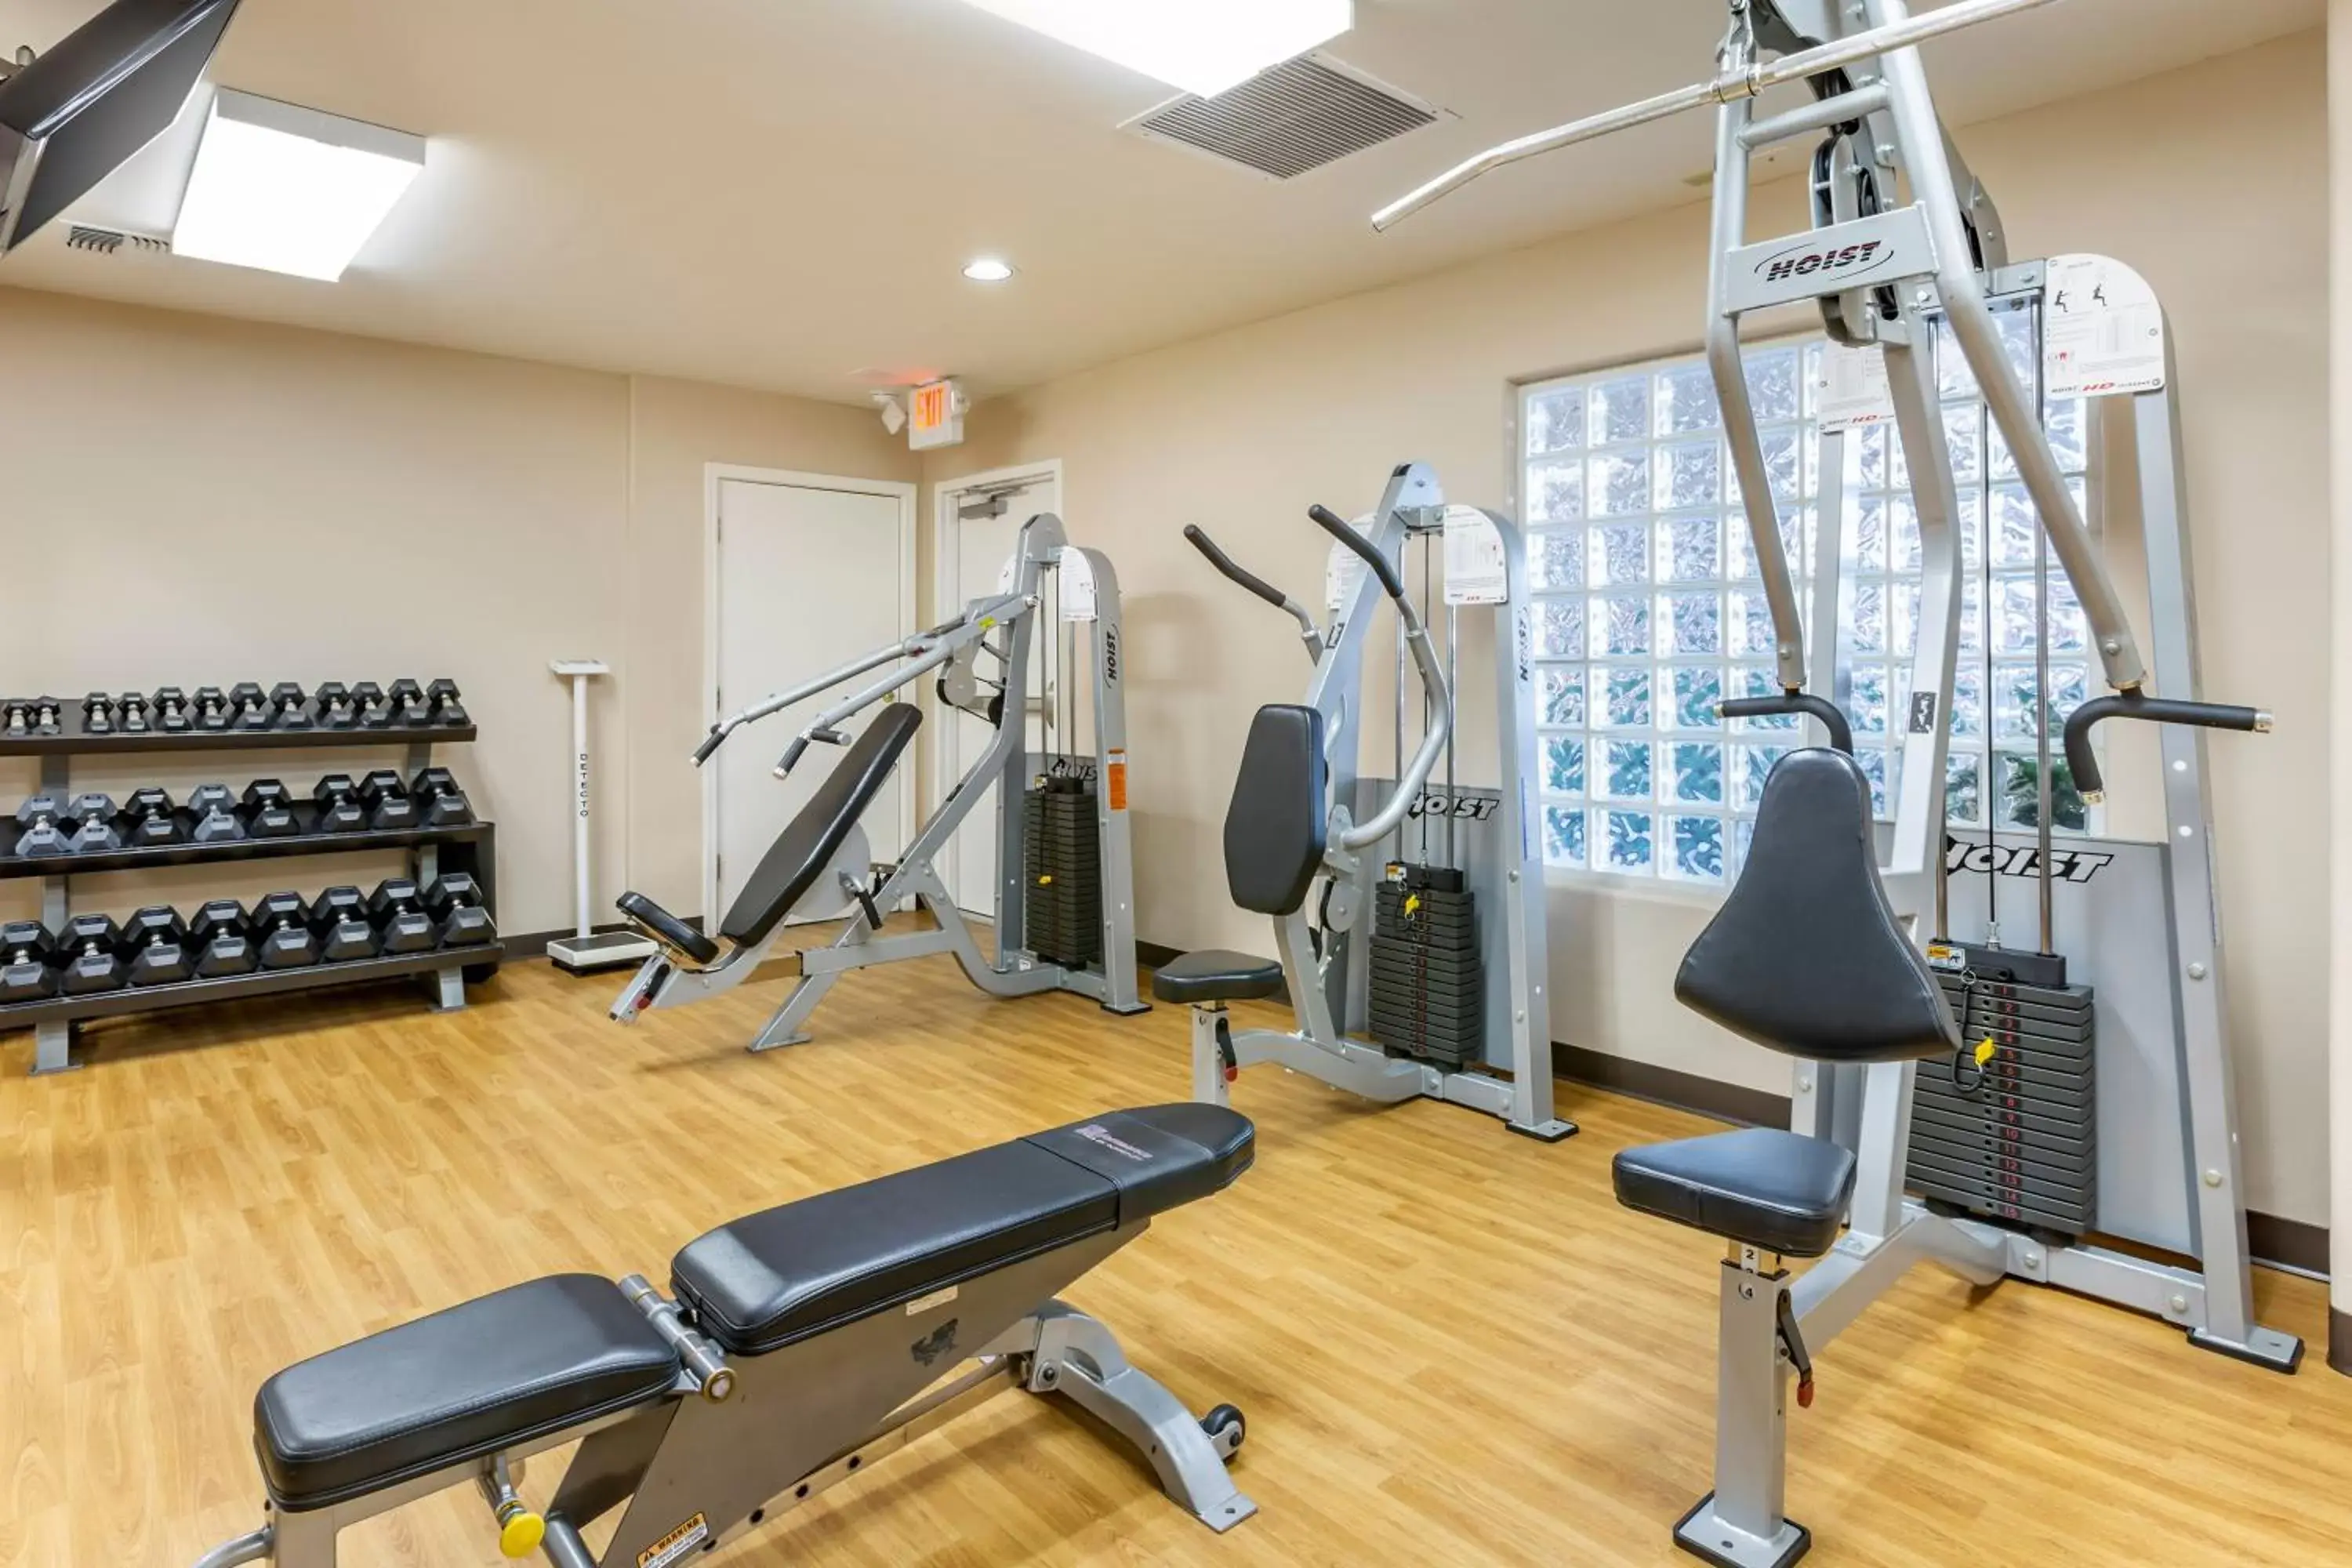 Fitness centre/facilities, Fitness Center/Facilities in Hilton Vacation Club Ridge on Sedona